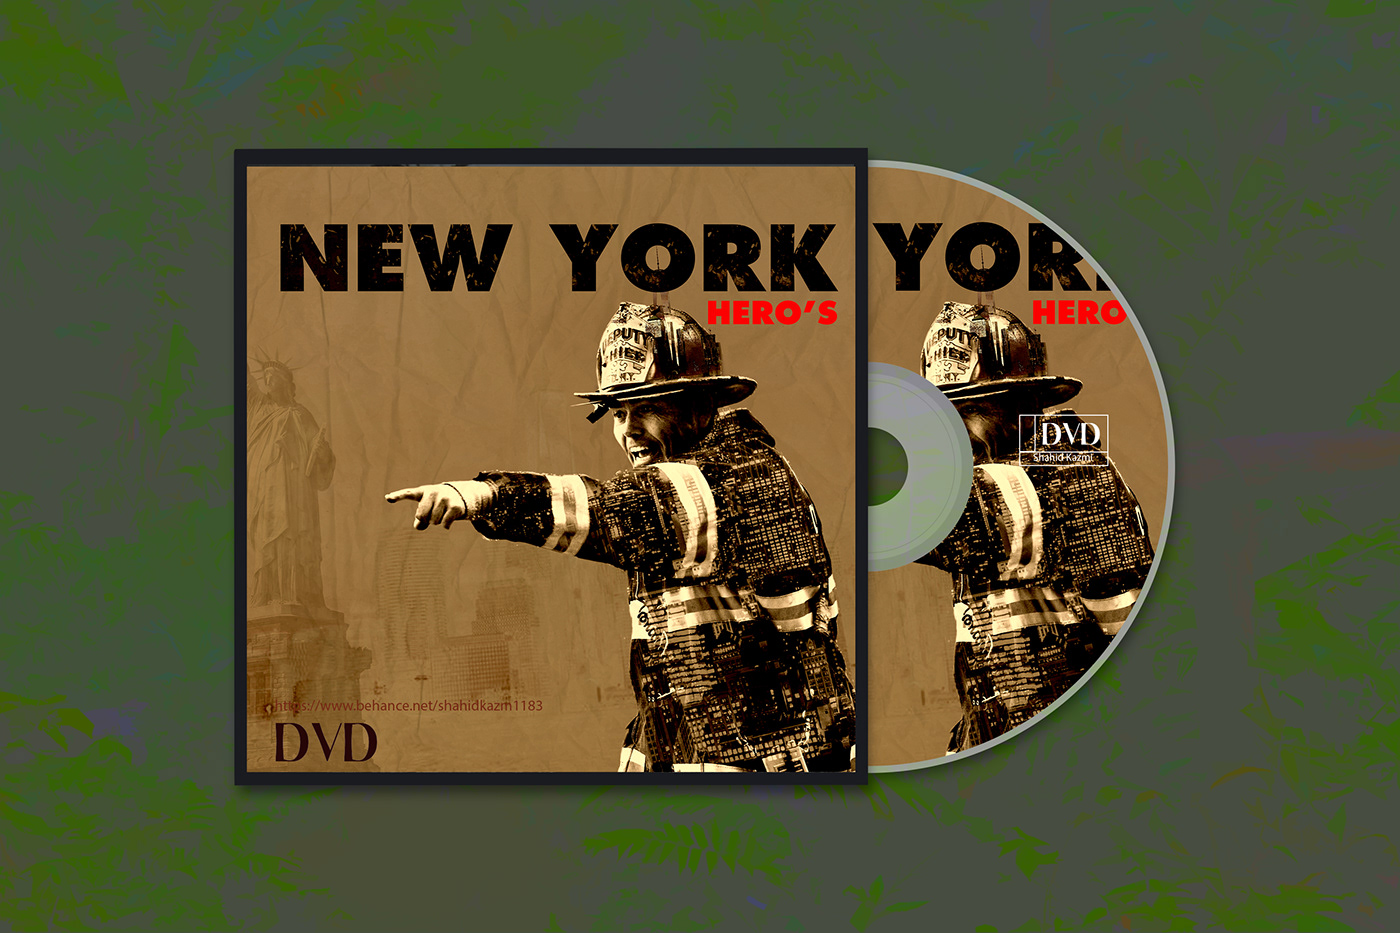 DVD dvd cover pakaging cd package cd case DVD case dvd package